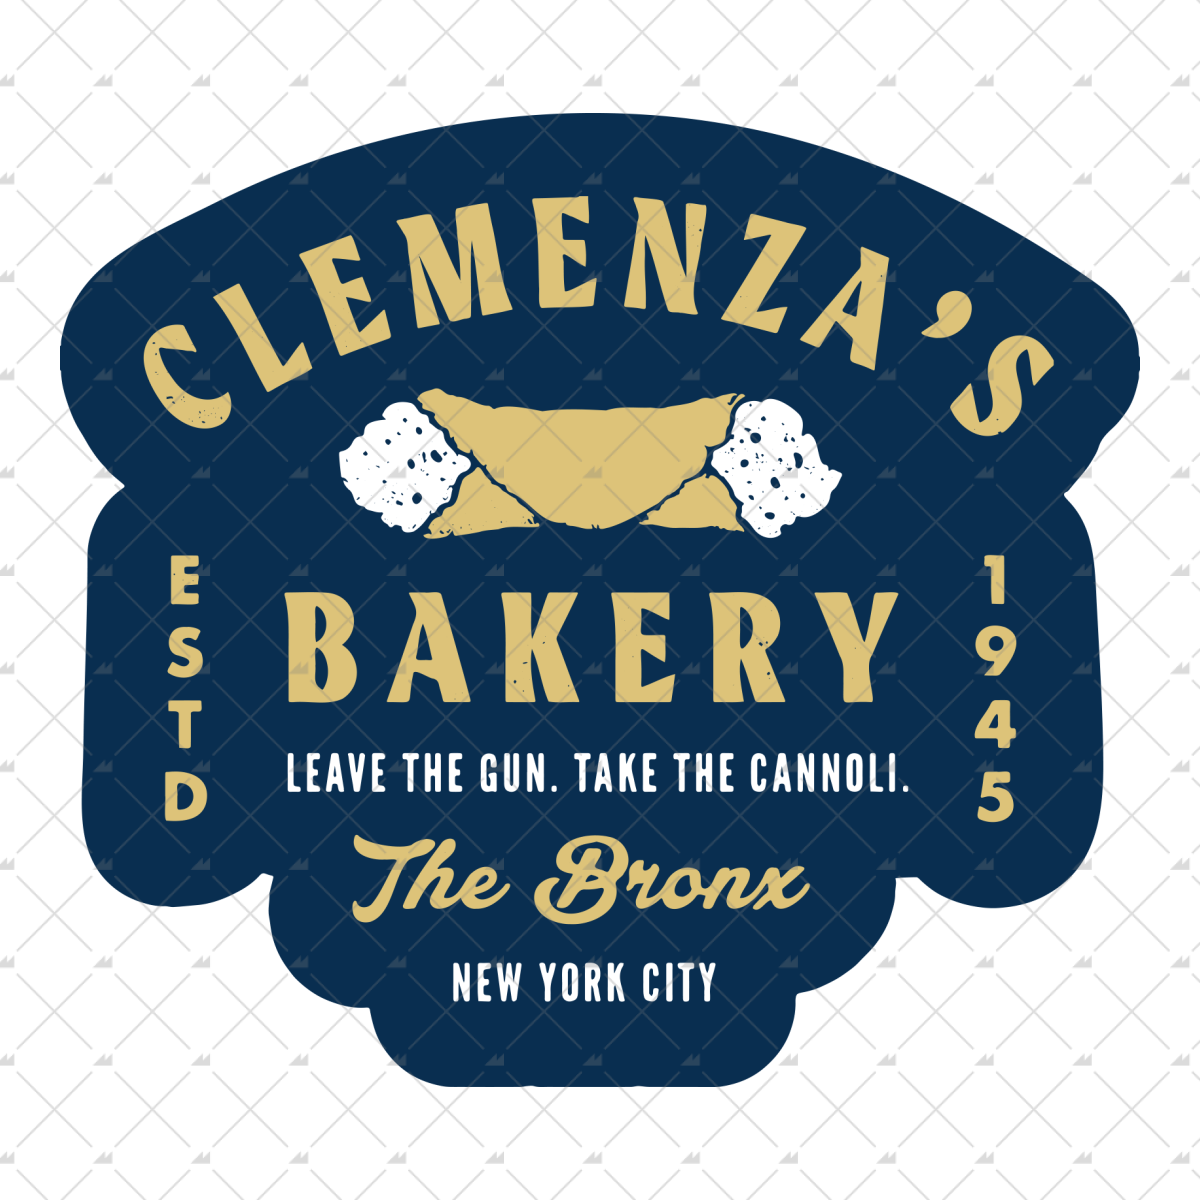 Clemenza's Bakery - Sticker